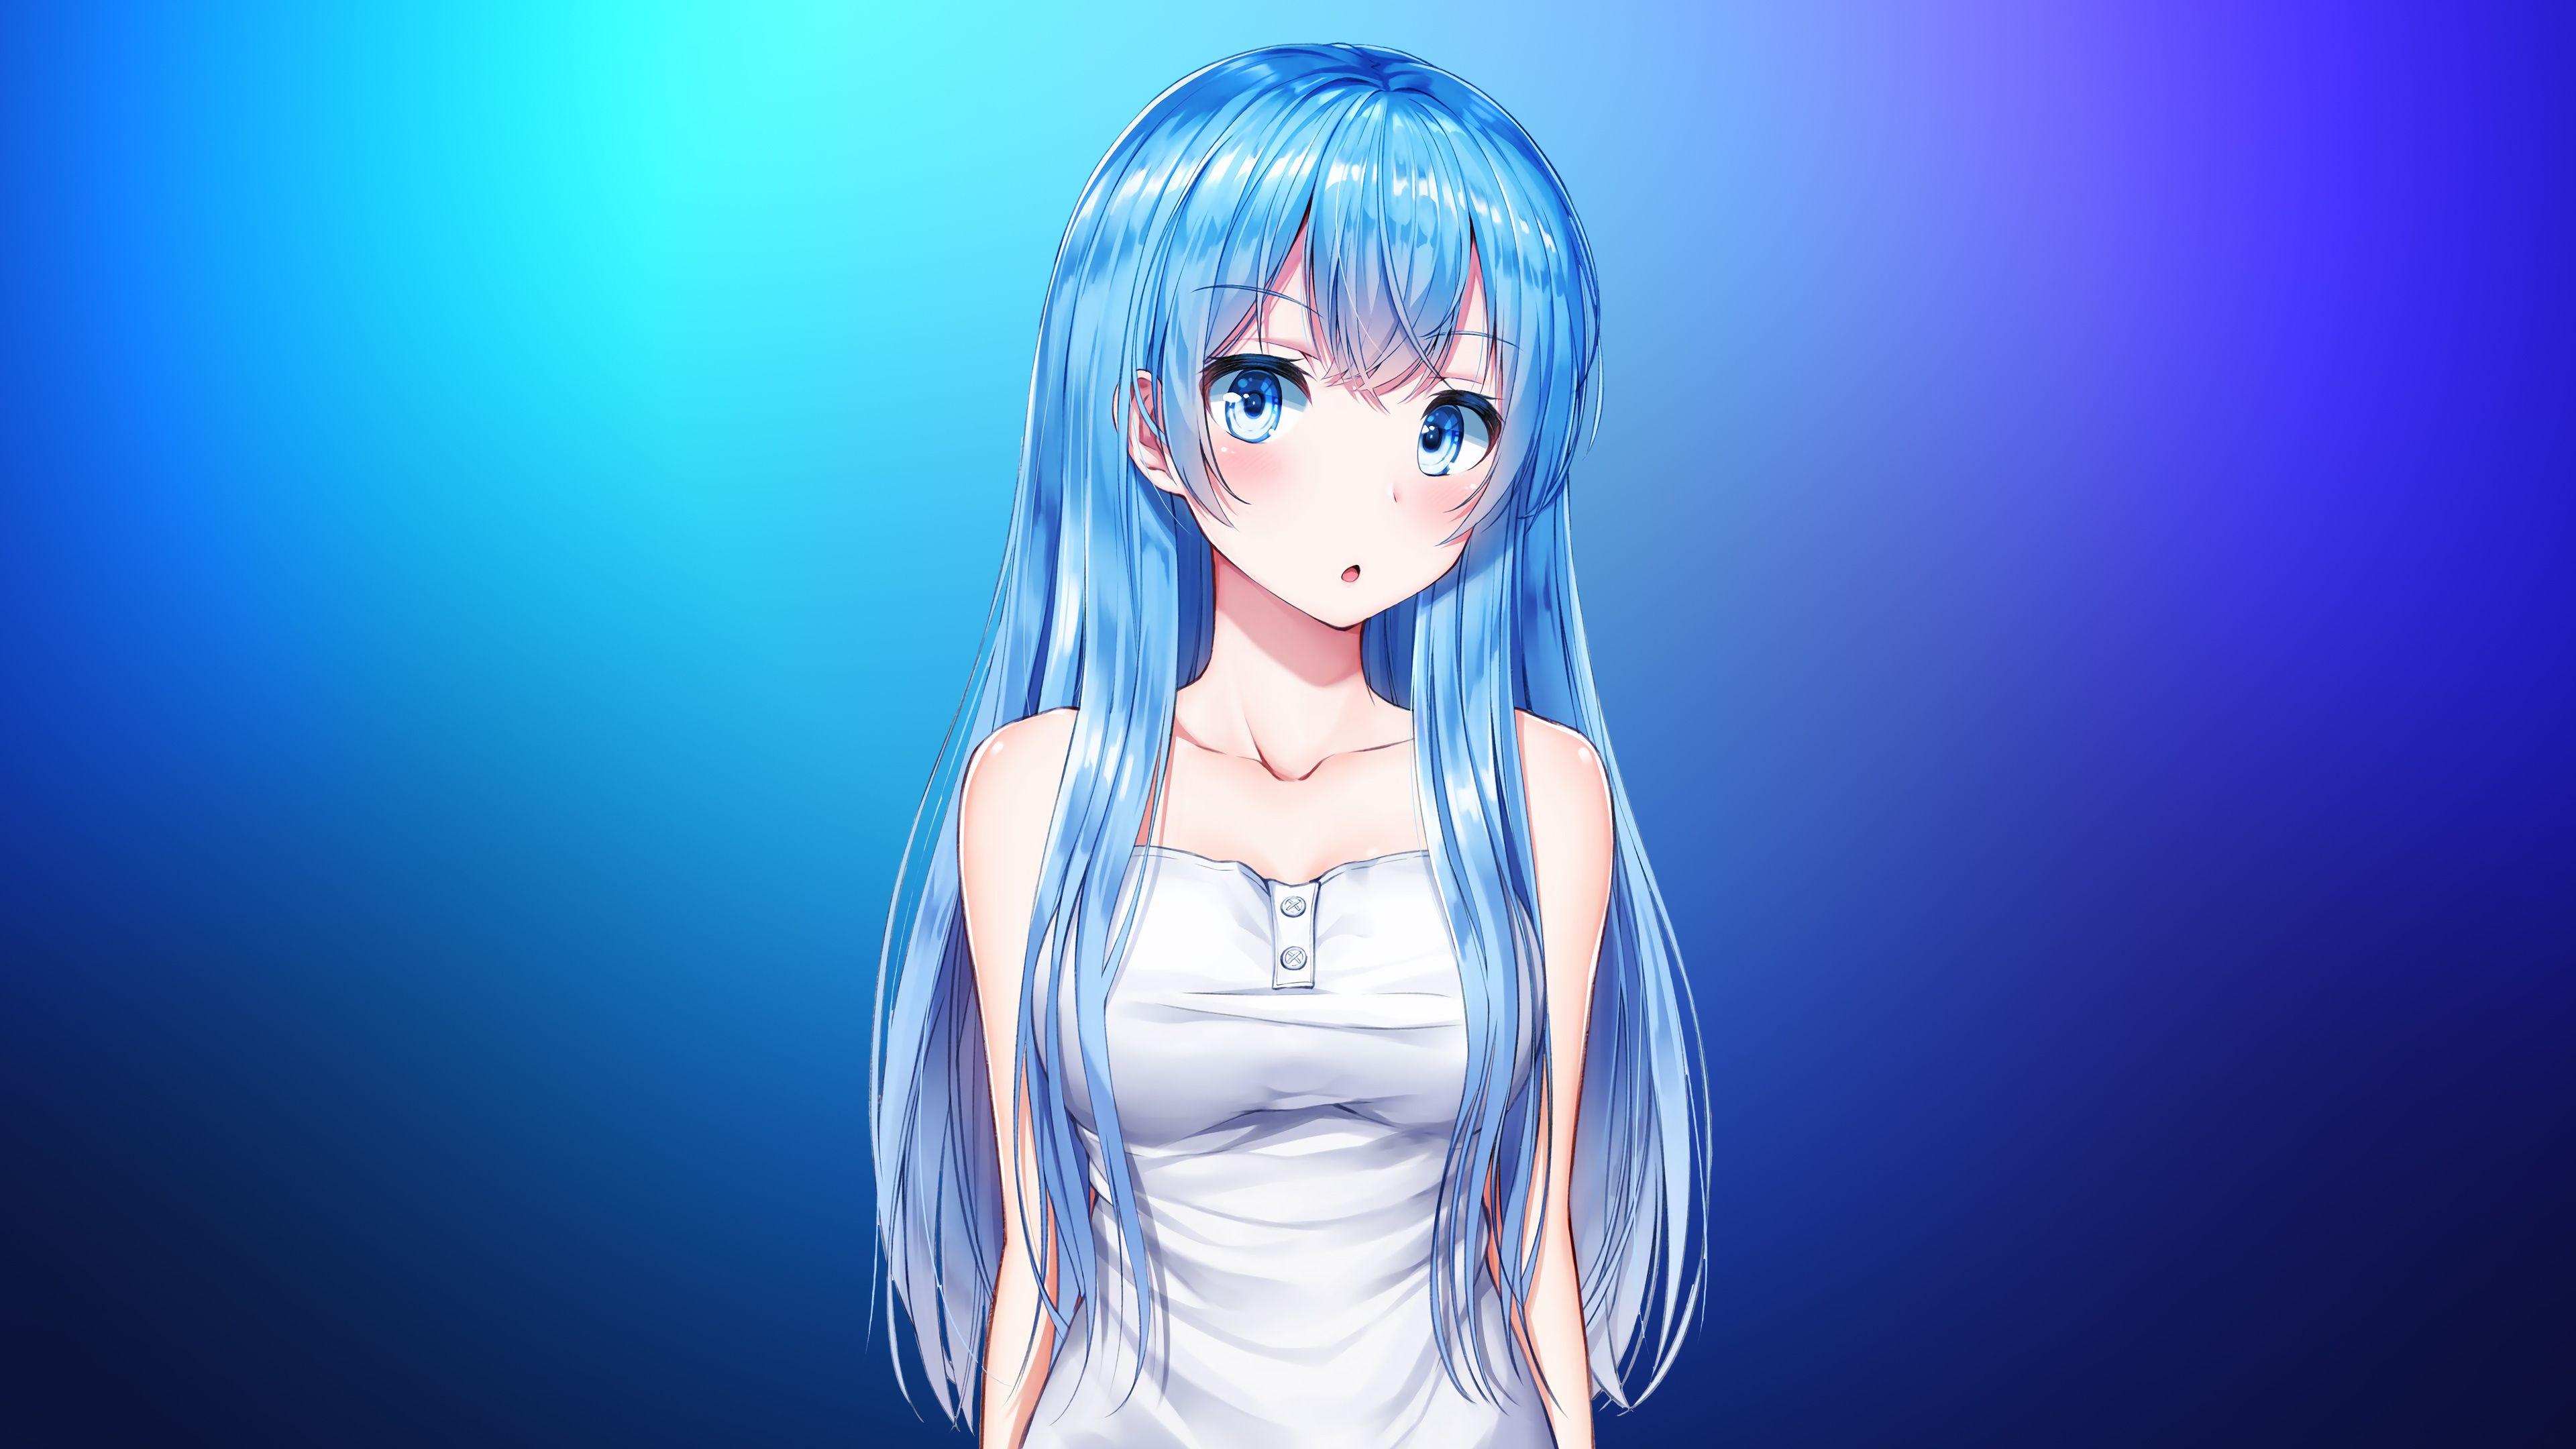 Download 3840x2400 blue hair, anime girl, cute, original 4k wallpaper, 4k, ultra HD 16:10 wallpaper, 3840x2400 HD image, background, 4863